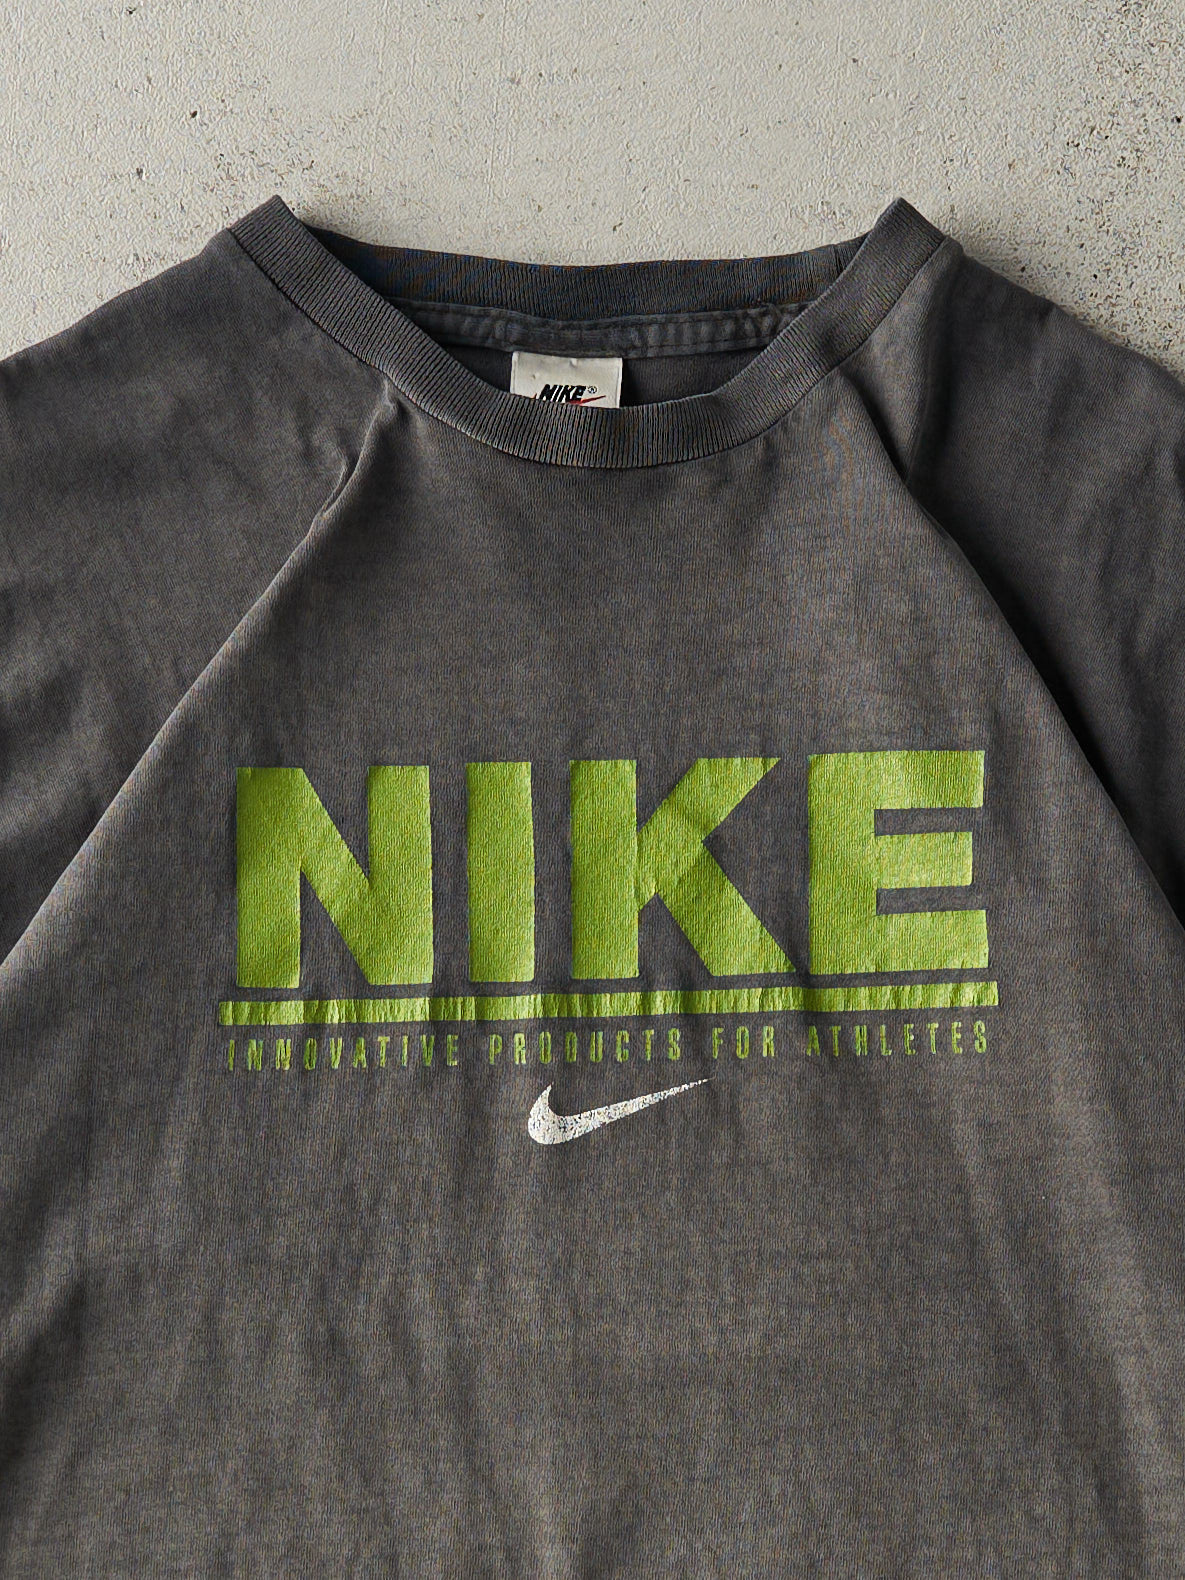 Vintage 90s Faded Black & Green Nike Logo Tee (L)